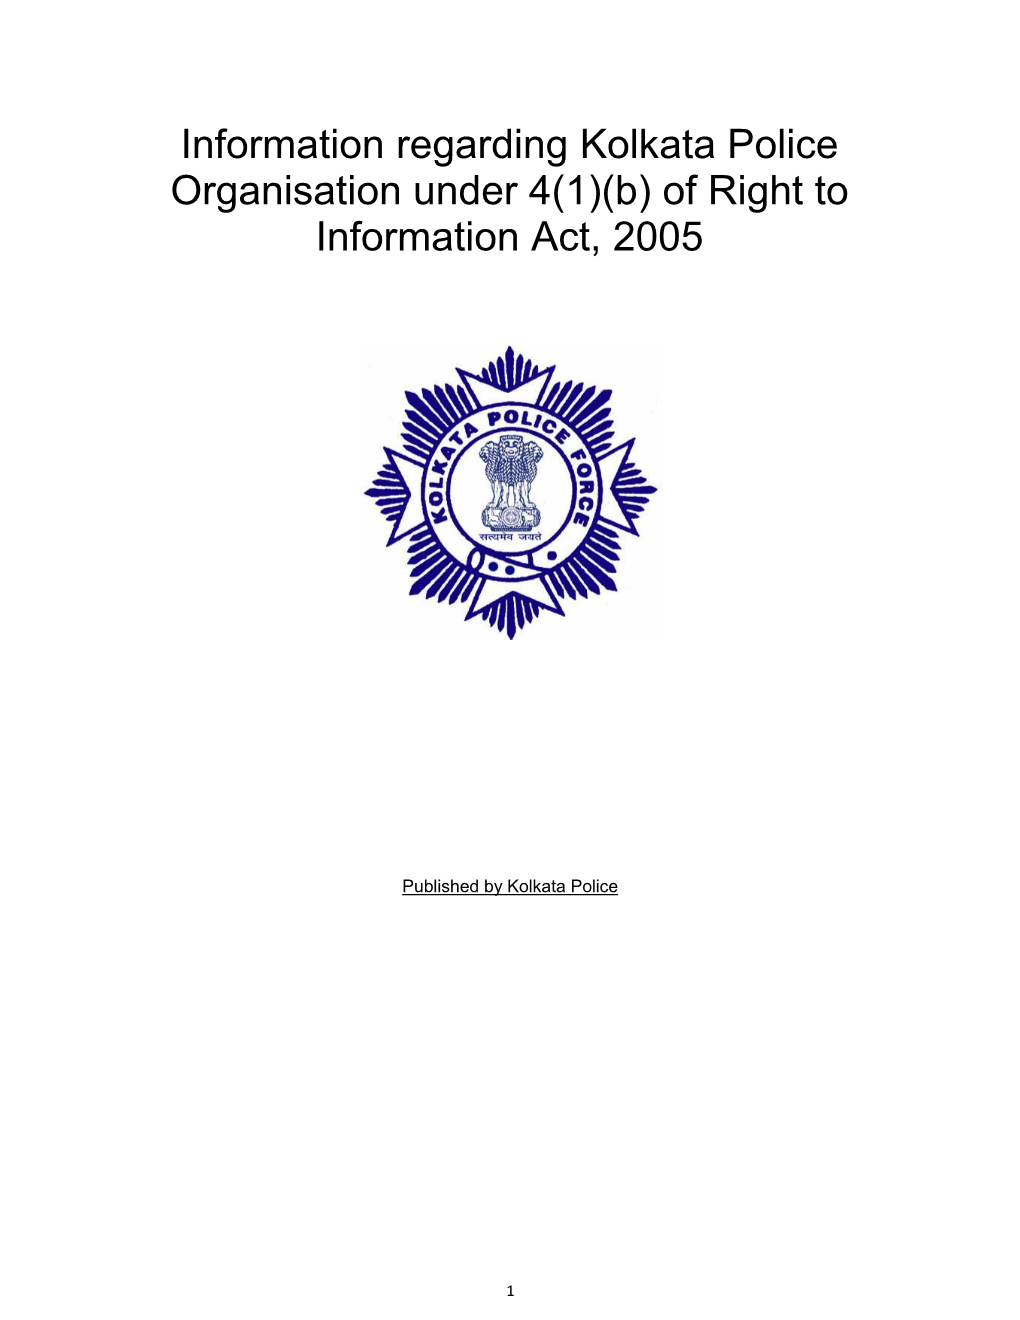 Information Regarding Kolkata Police Organisation Under 4(1)(B) of Right to Information Act, 2005